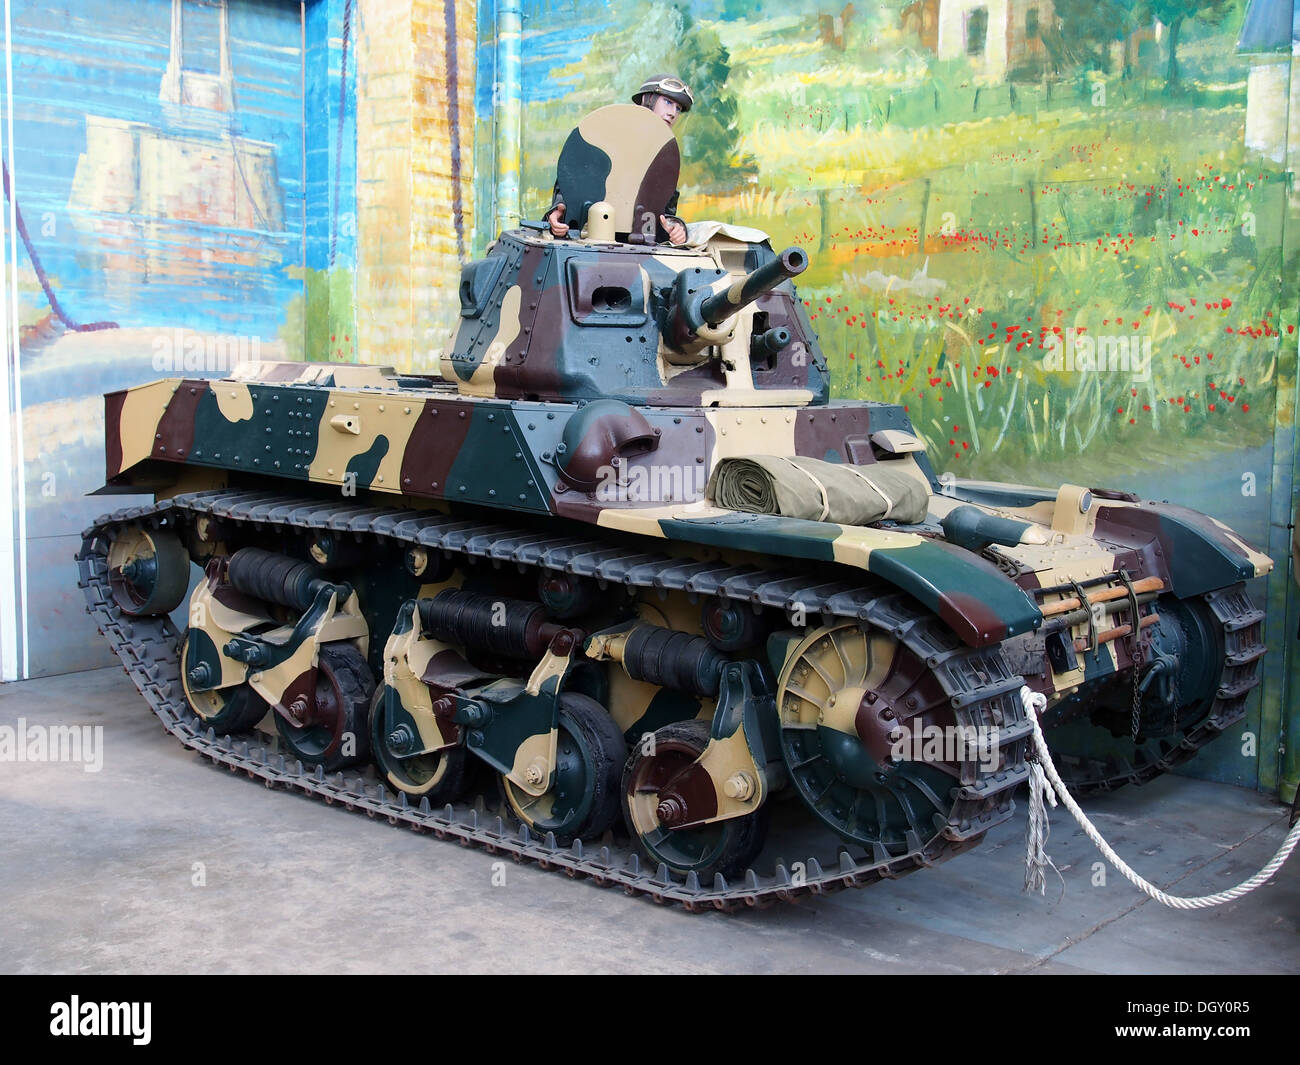 AMC 35, tank museum, Saumur, France, pic-2 Stock Photo - Alamy